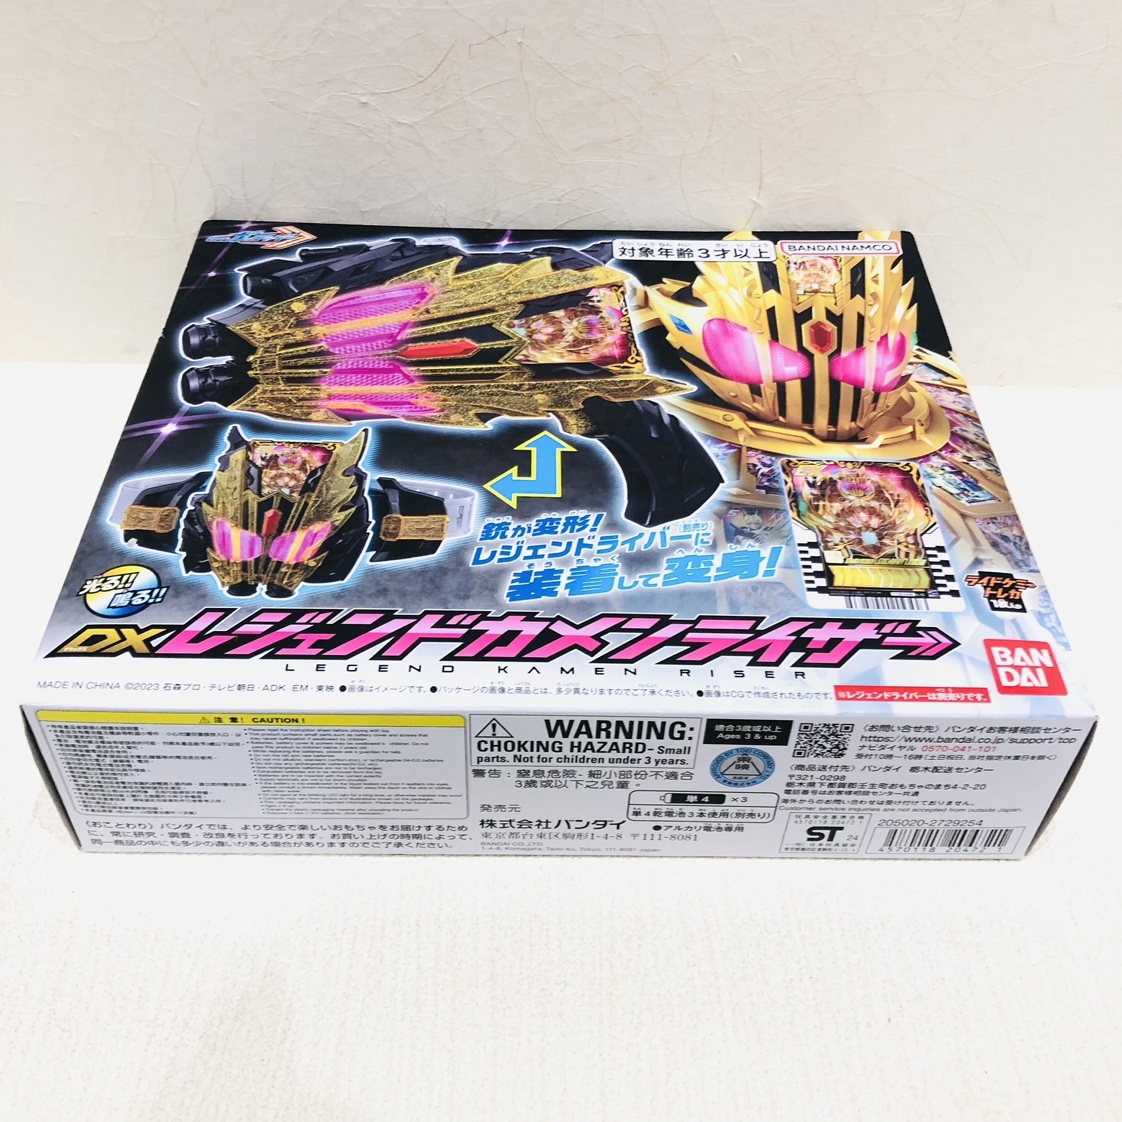 [KIM-2181][1 иен ~] нераспечатанный DX Legend ka men подъемник Bandai Namco BANDAI игрушка игрушка мужчина ребенок Kids Kamen Rider 